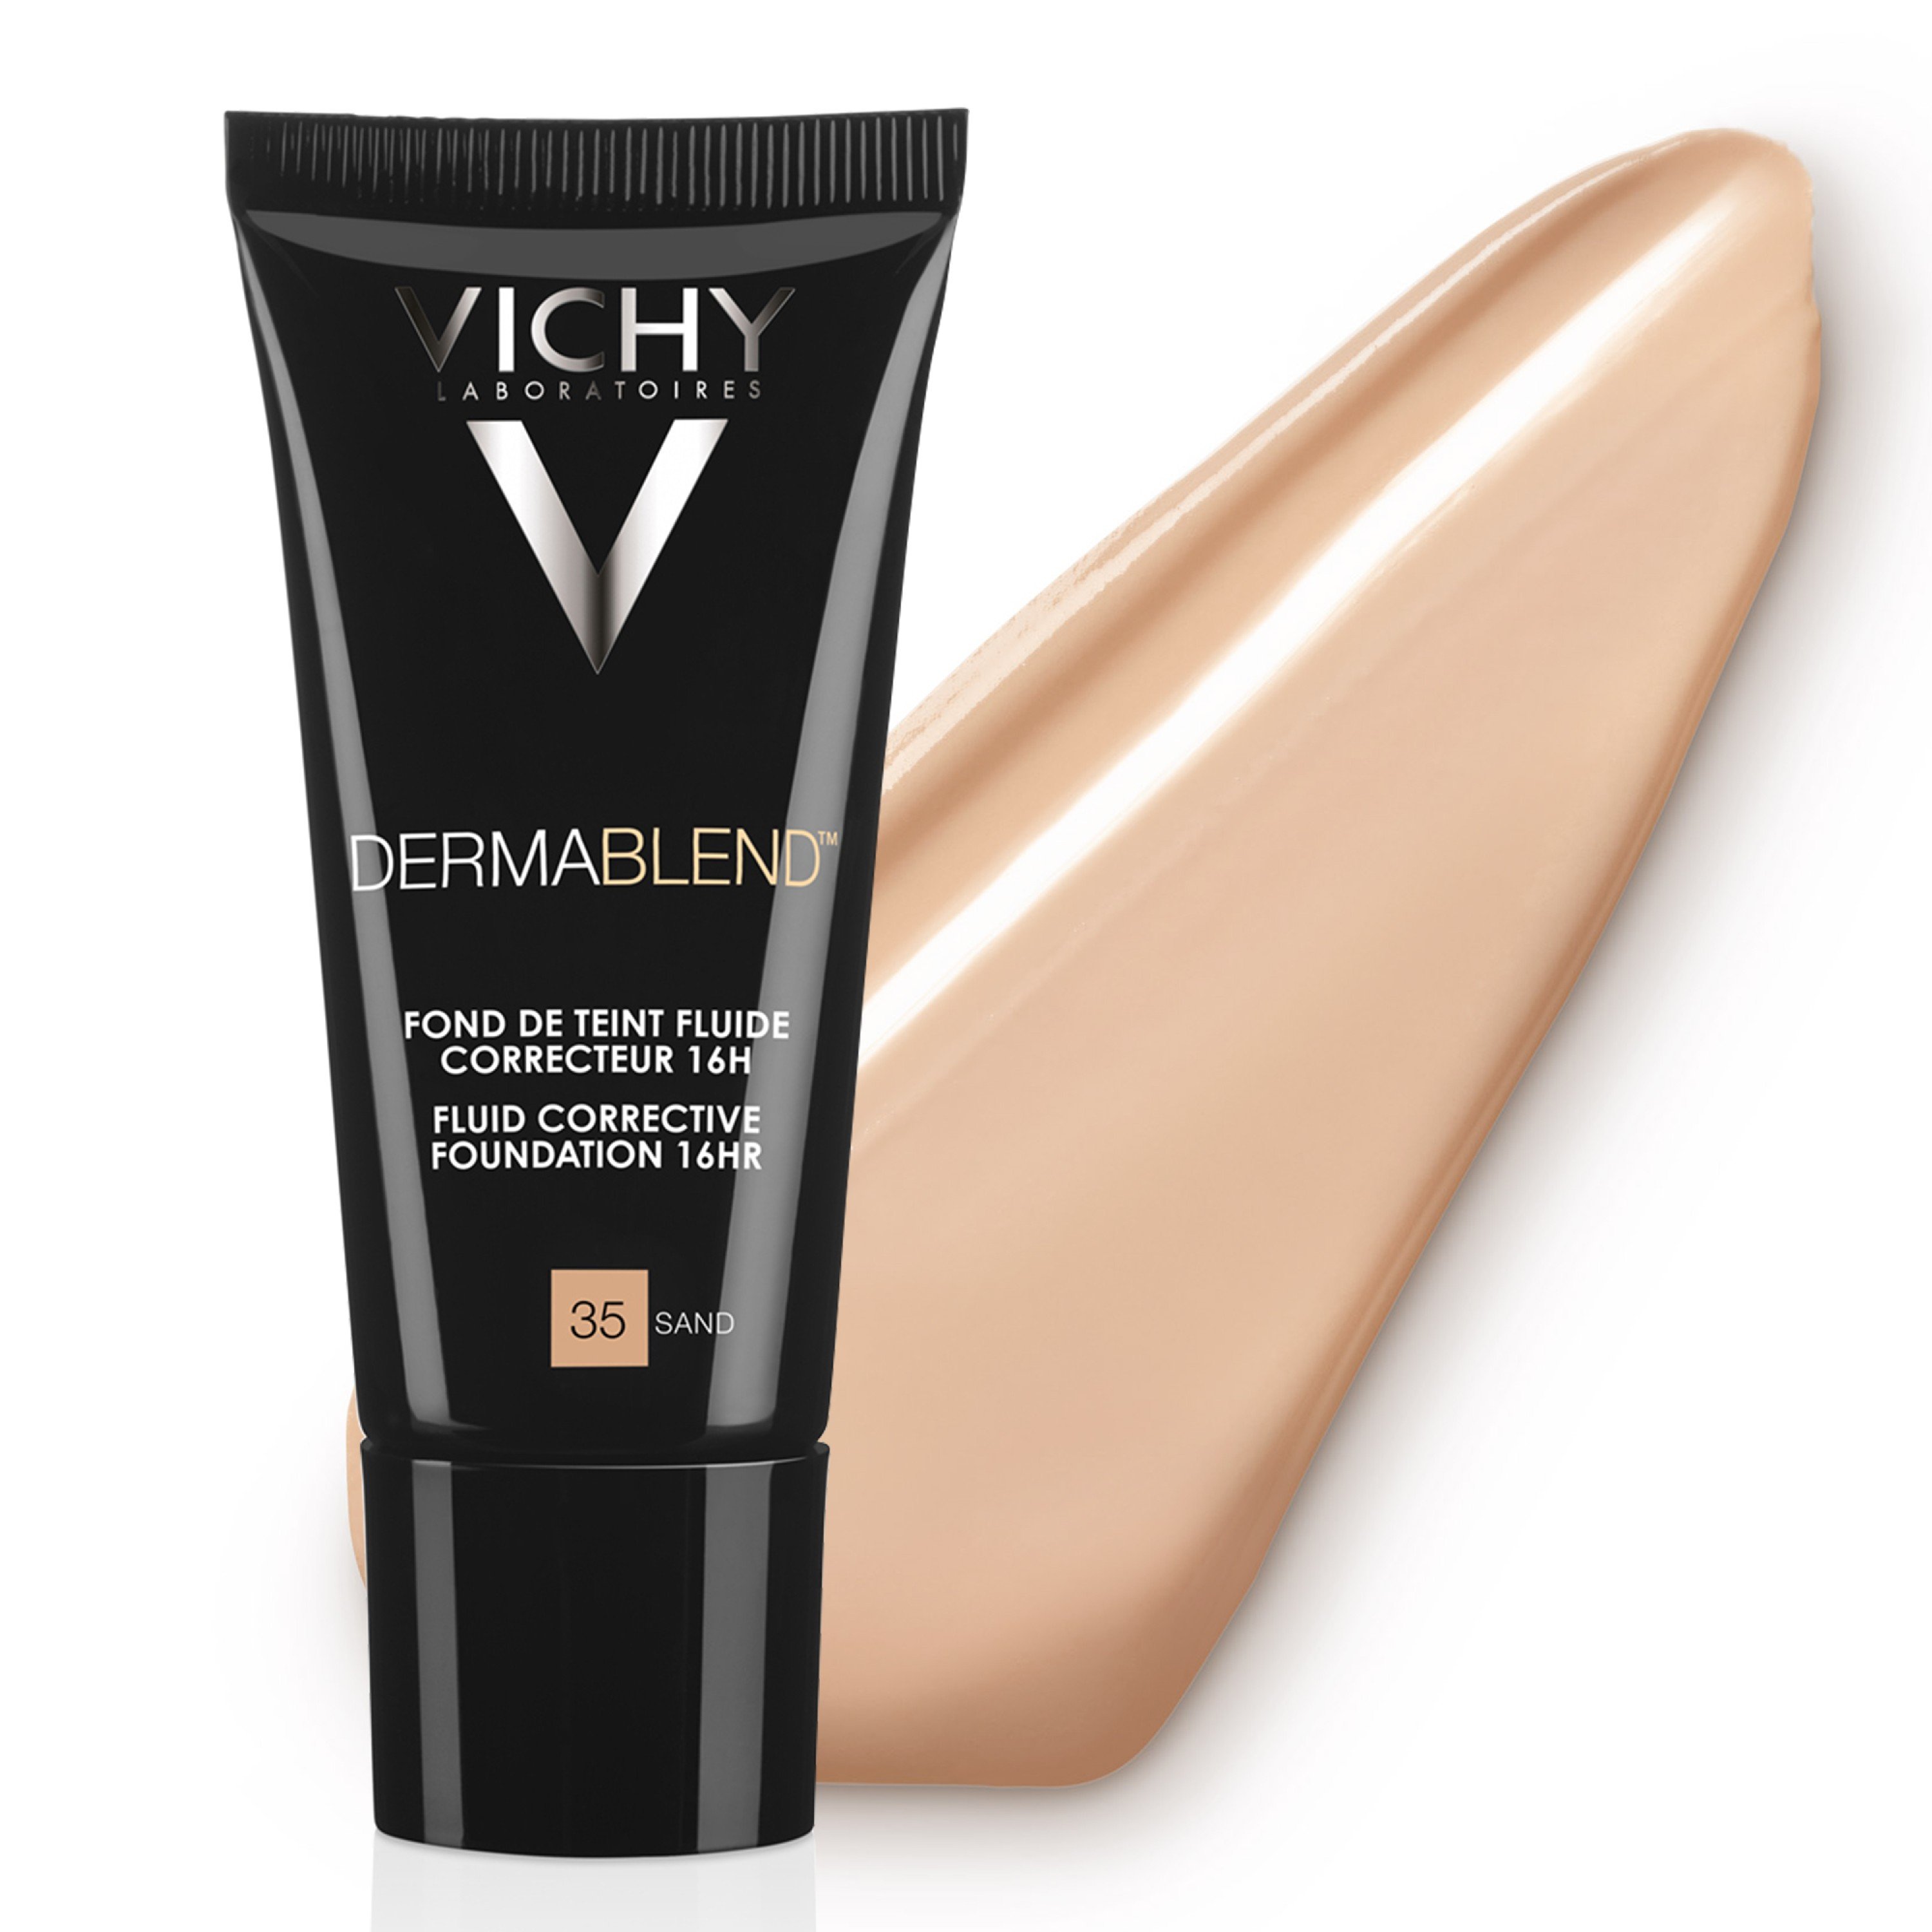 Dermablend Vichy Fondo Maquillaje Fluido| Farmacia Barata